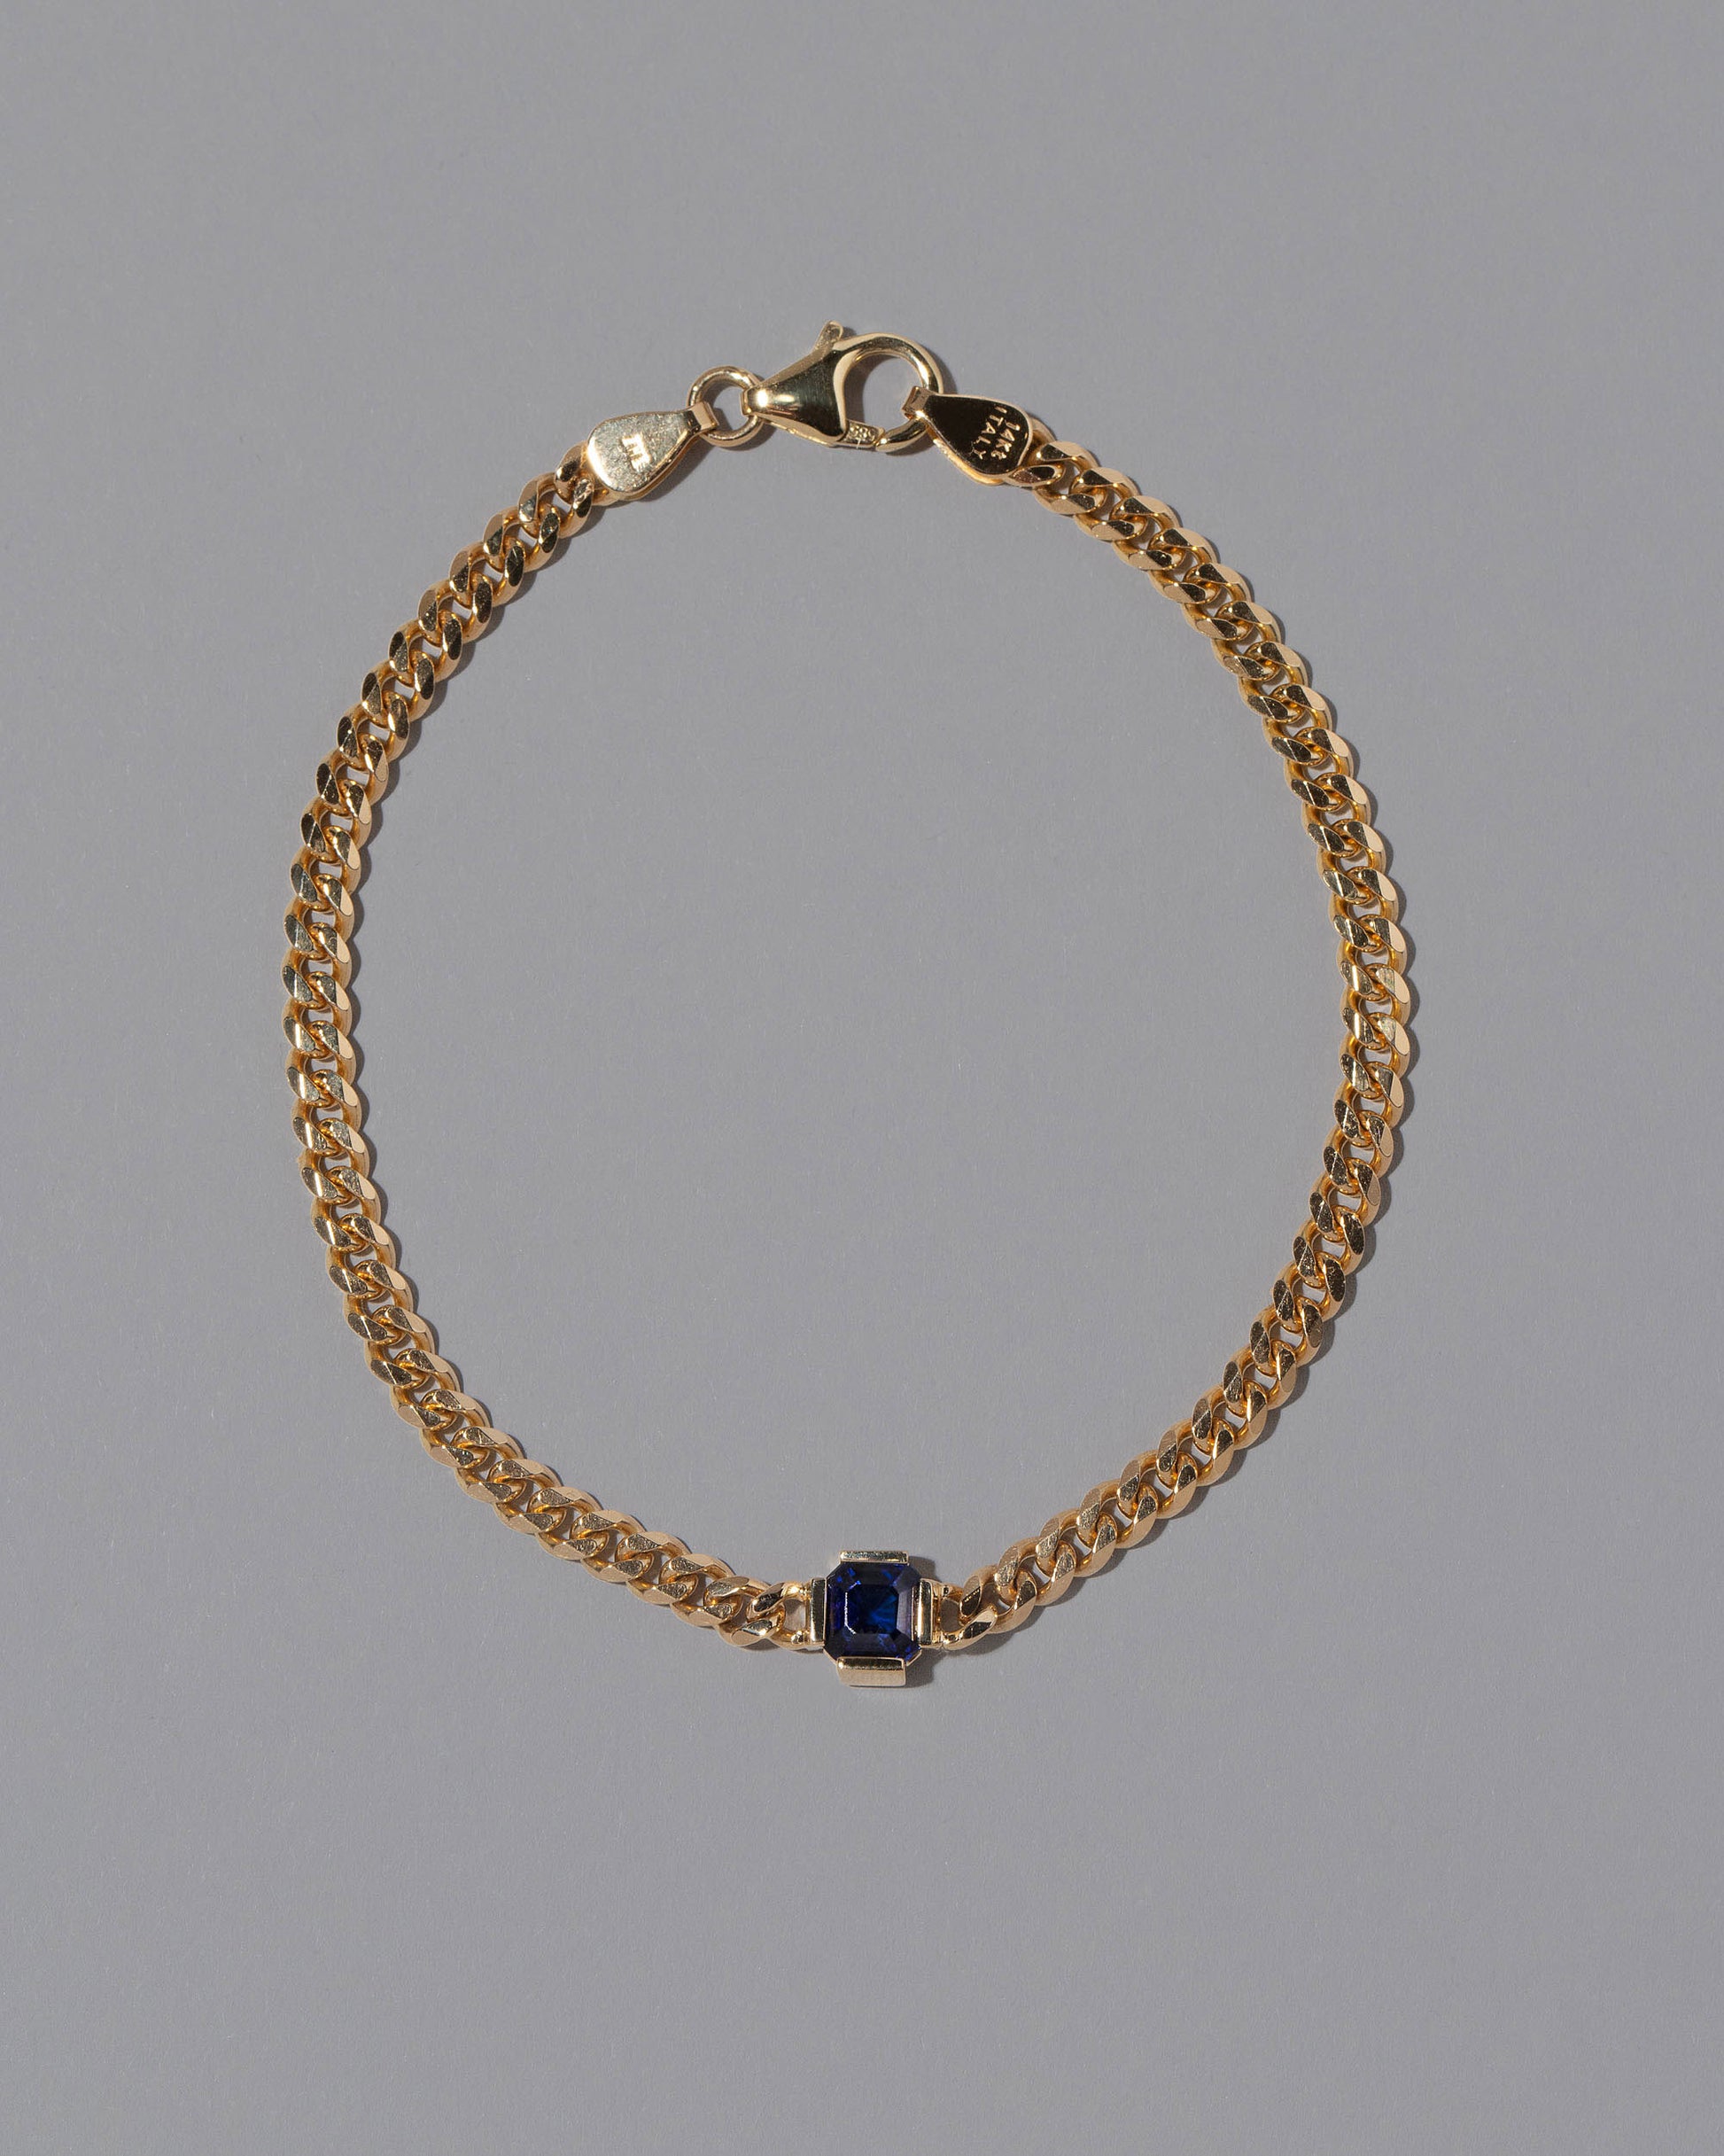 Blue Sapphire Fold Bracelet on grey color background.